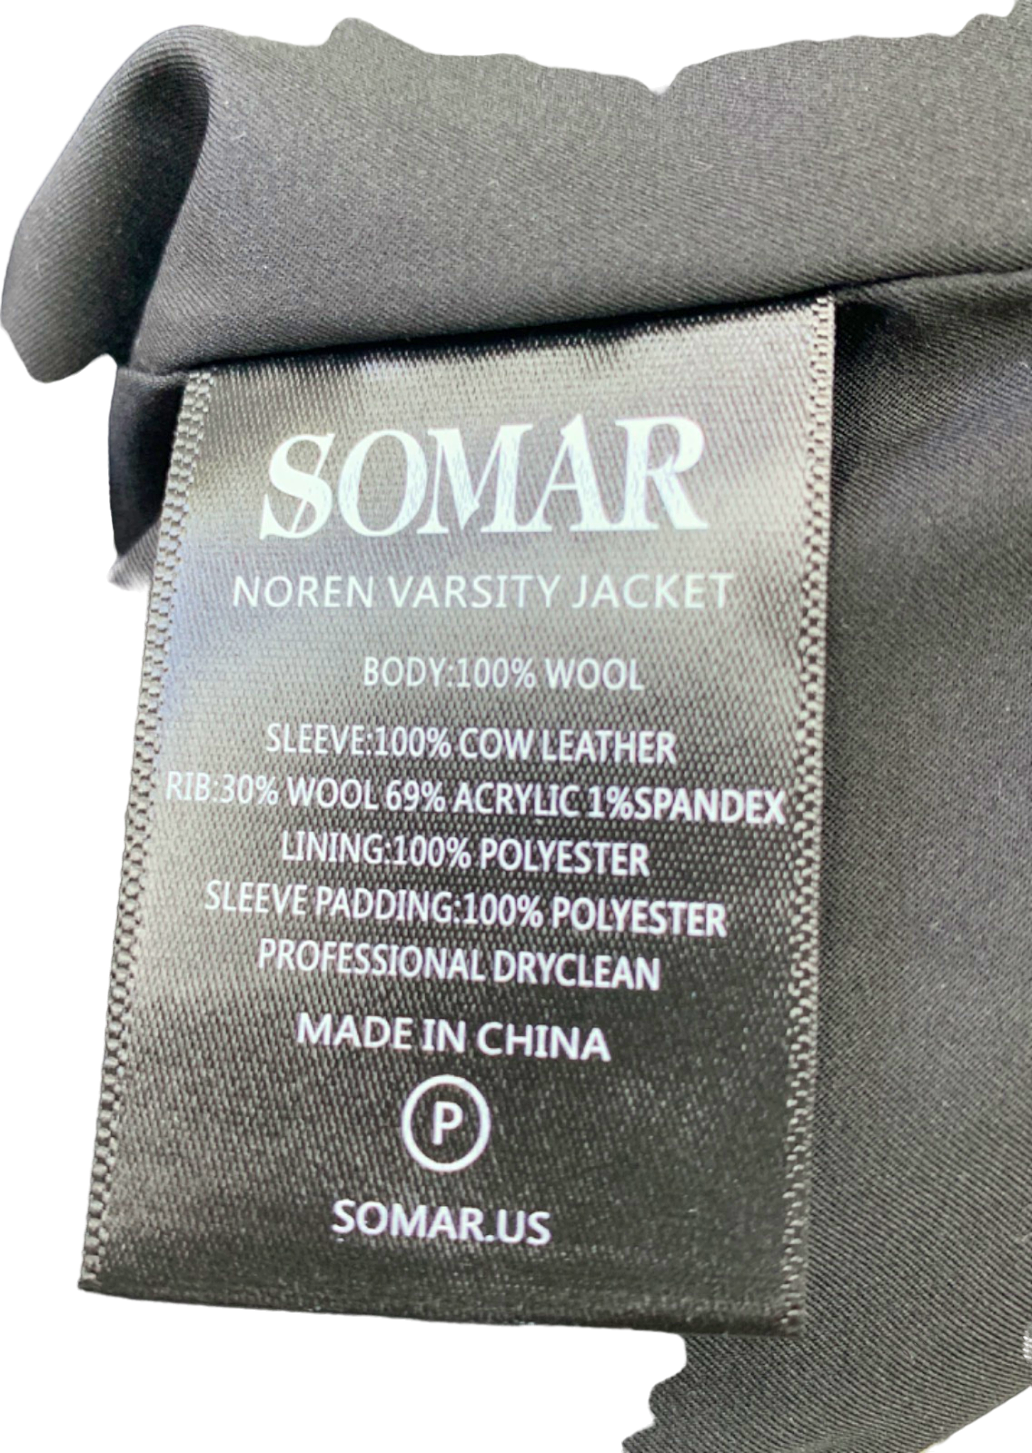 Somar Black and White Noren Varsity Jacket UK L